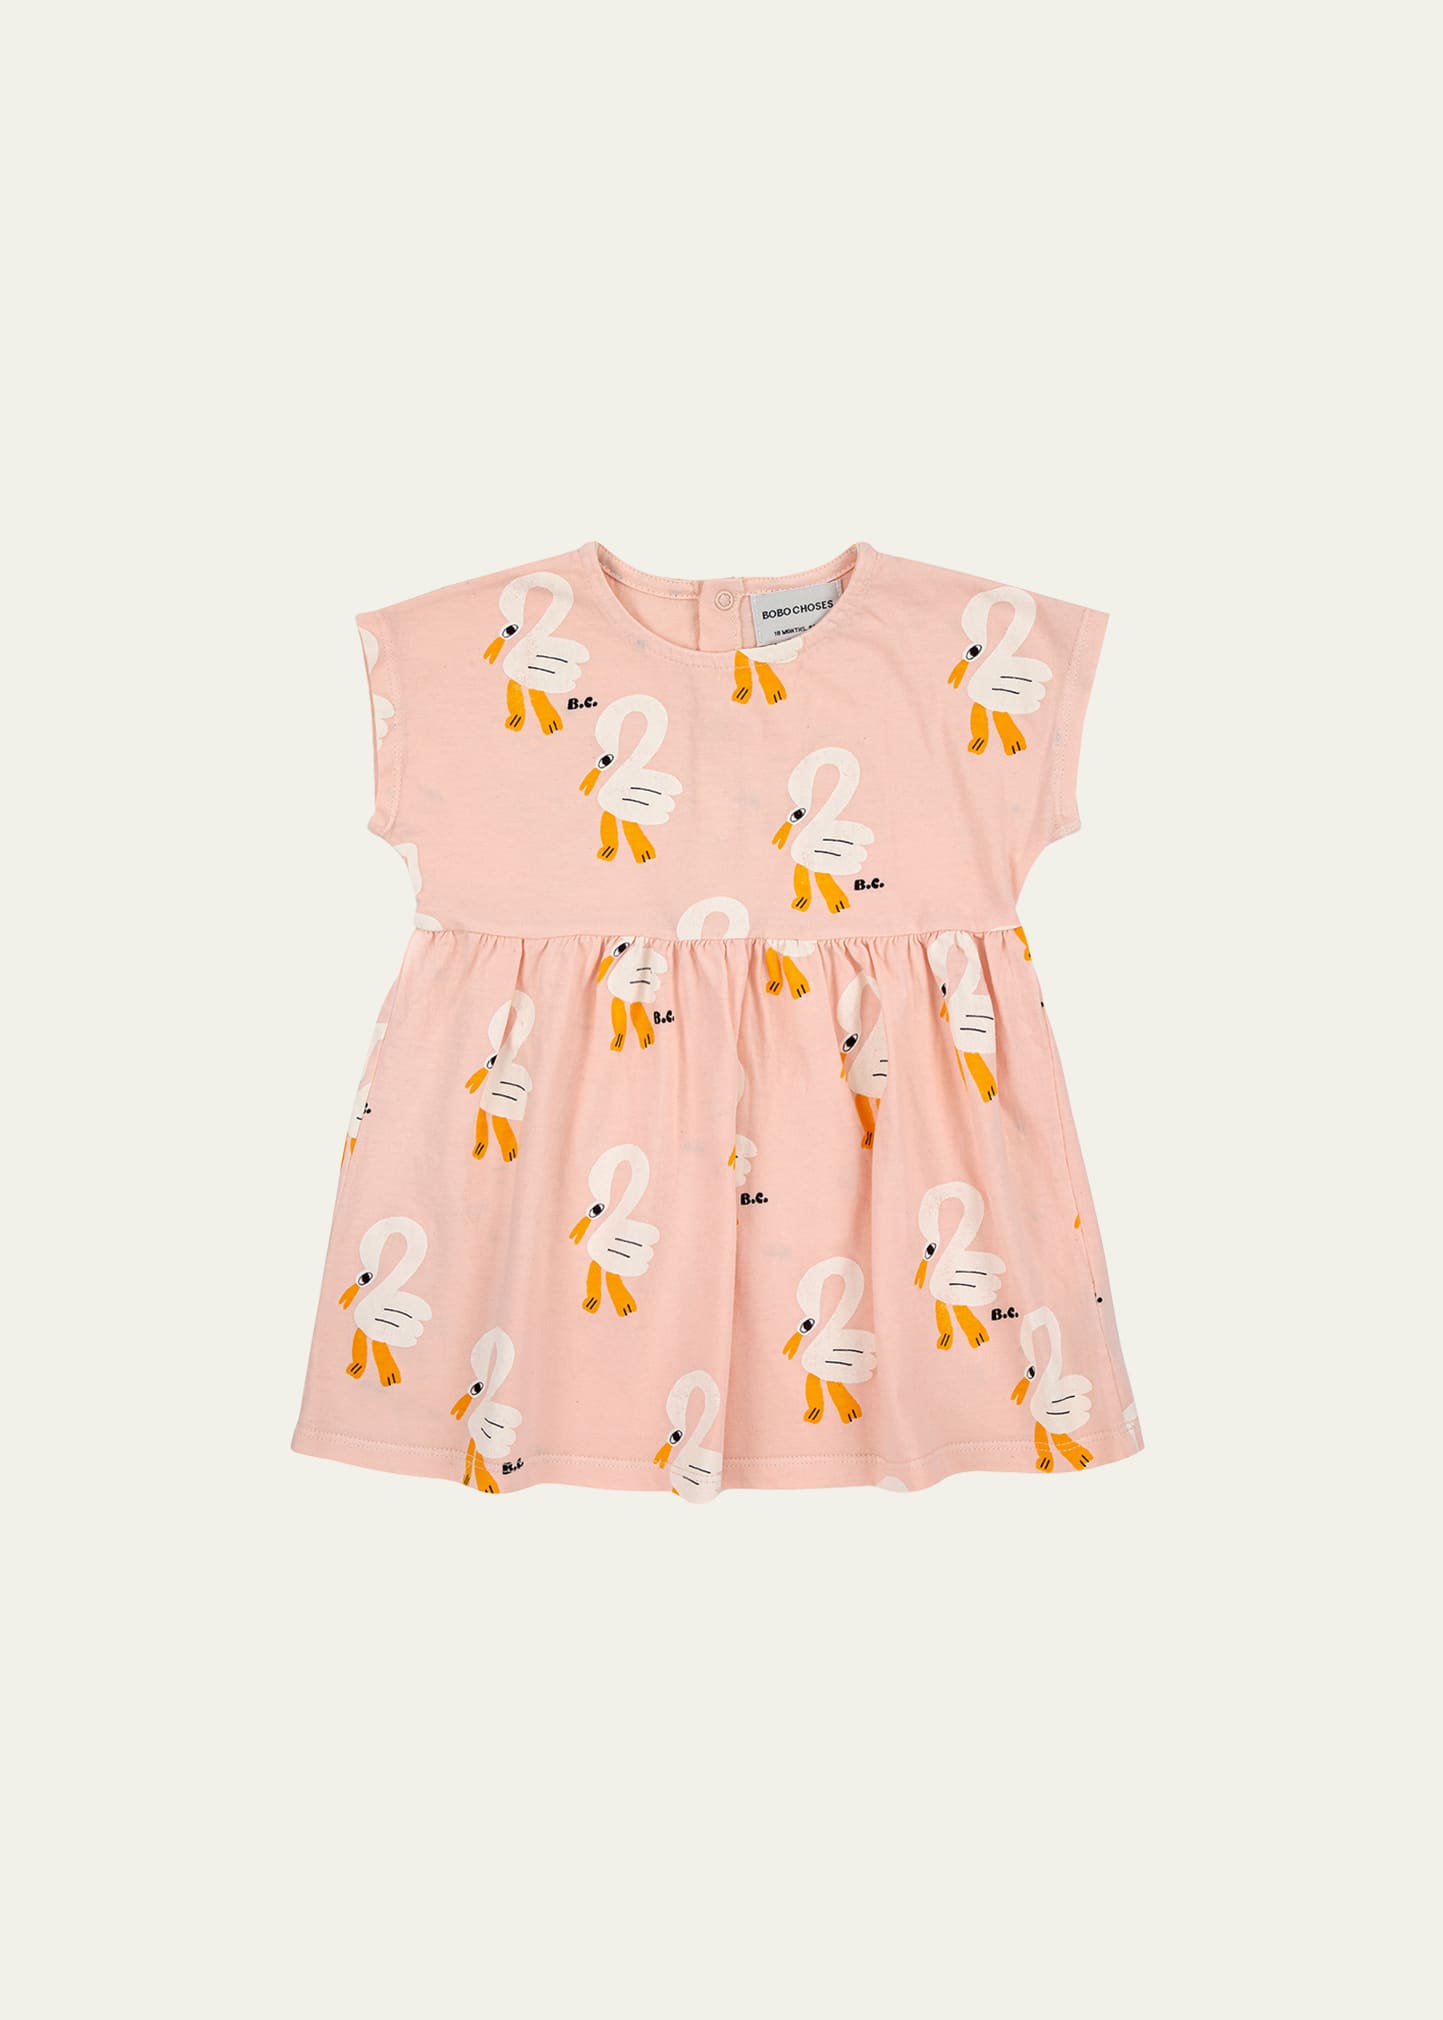 Bobo Choses Girl's Pelican Organic Cotton Dress, Size 6M-24M